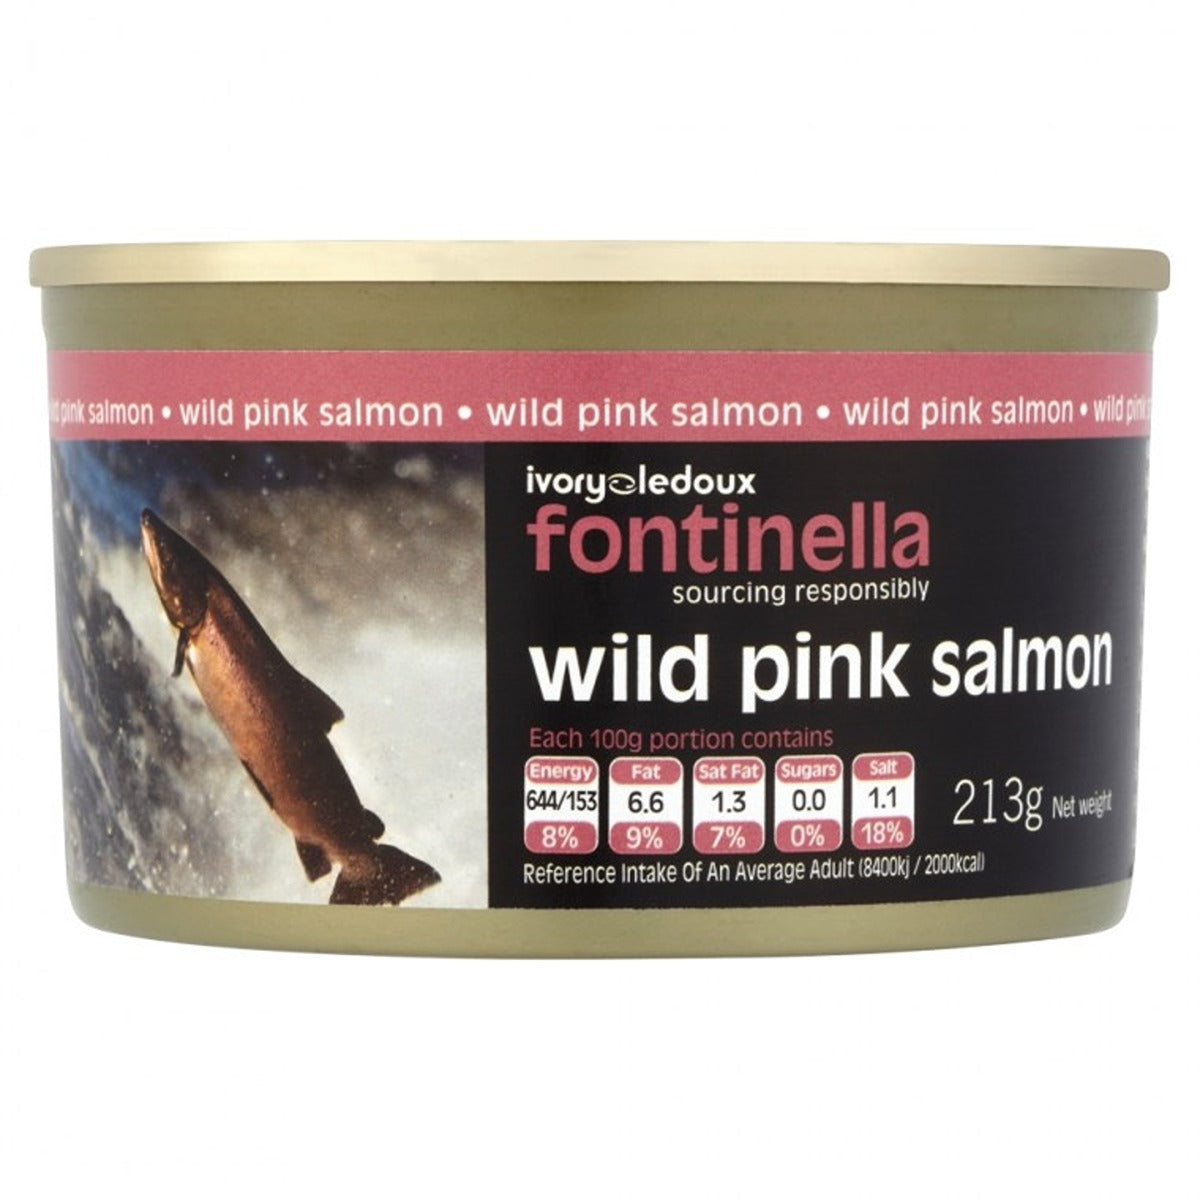 Fontinella - Wild Pink Salmon - 213g - Continental Food Store